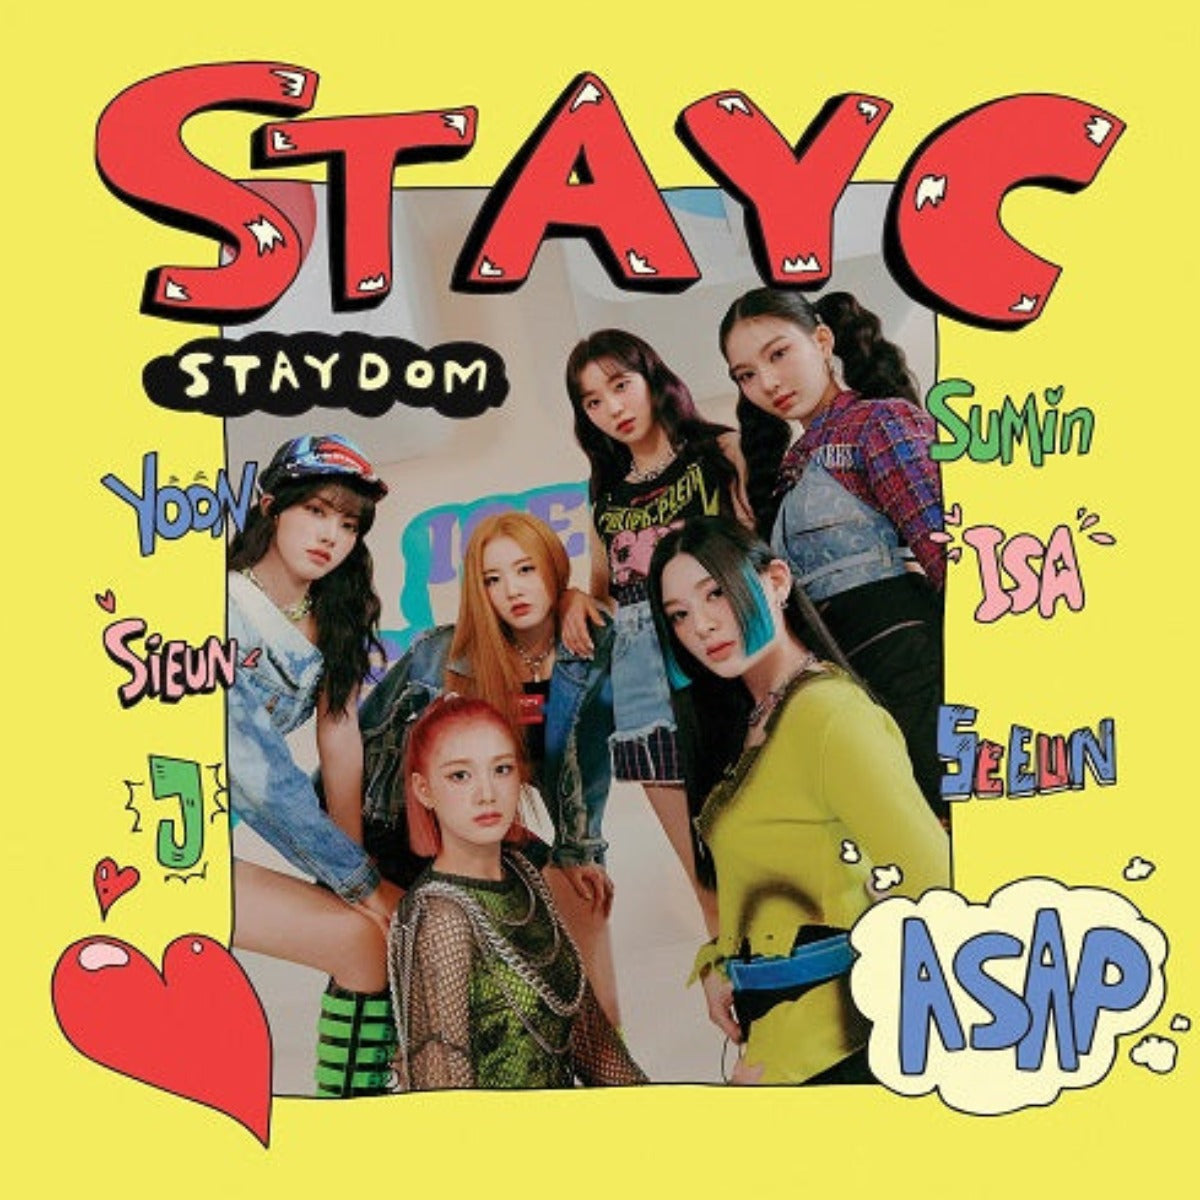 STAYC Single Album Vol. 2 - STAYDOM